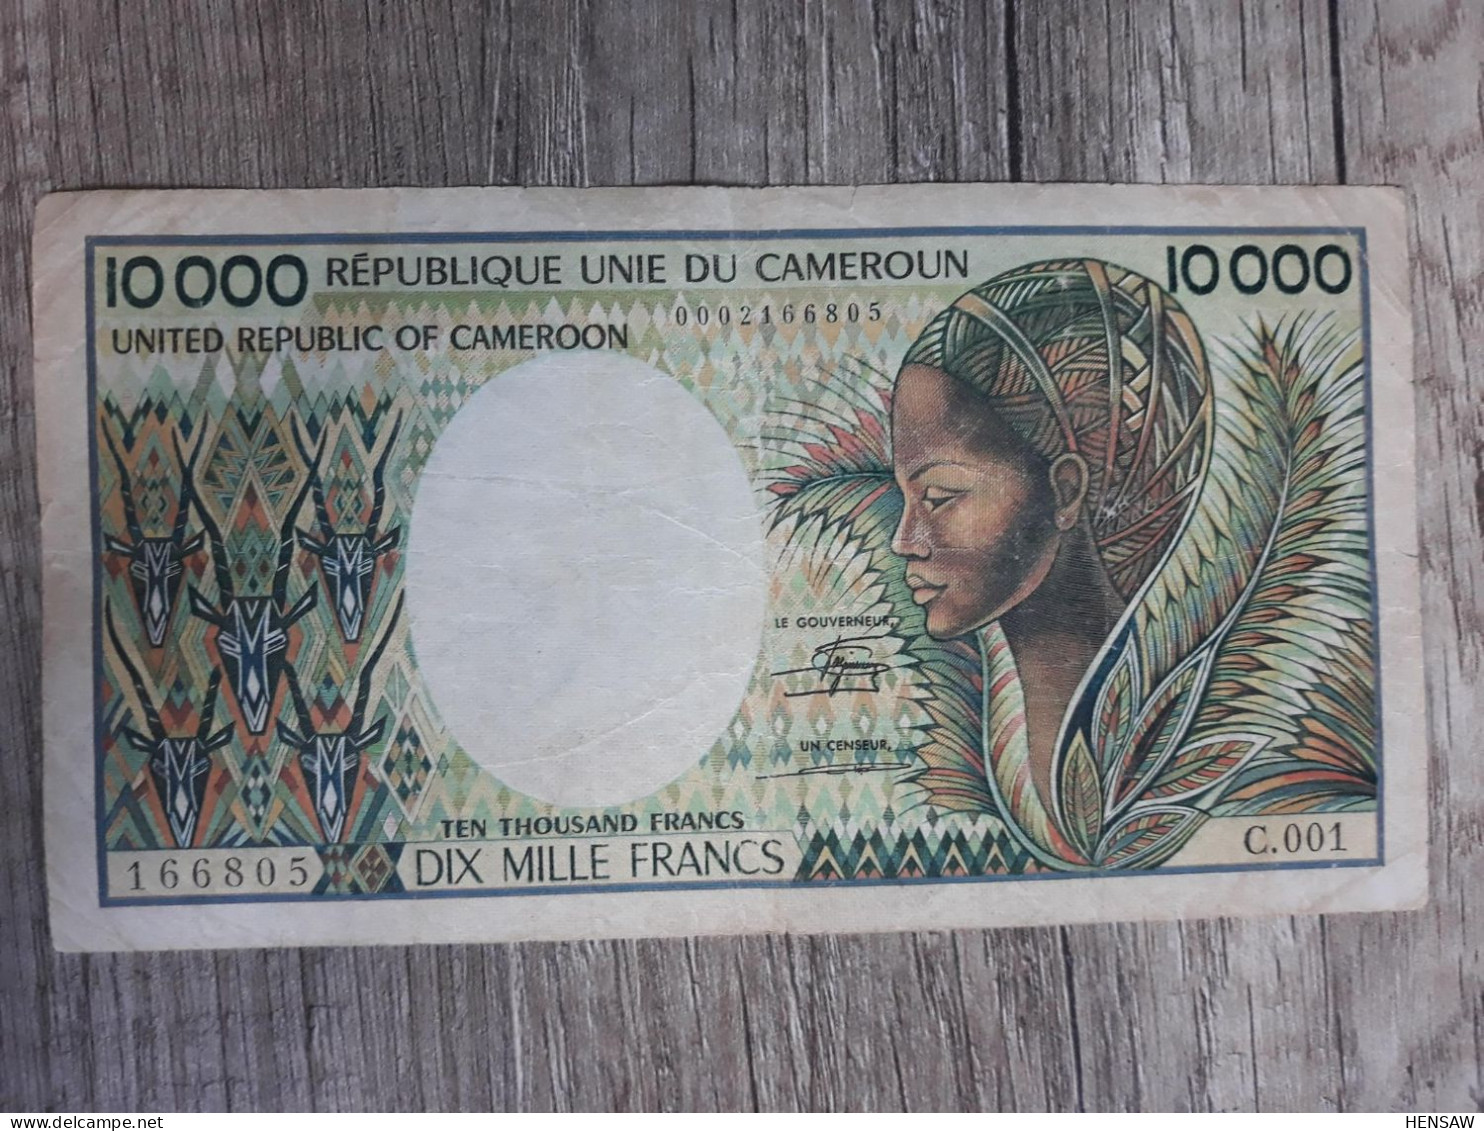 CAMEROON 10000 FRANCS 1981 ND P 20 USED USADO - Cameroon